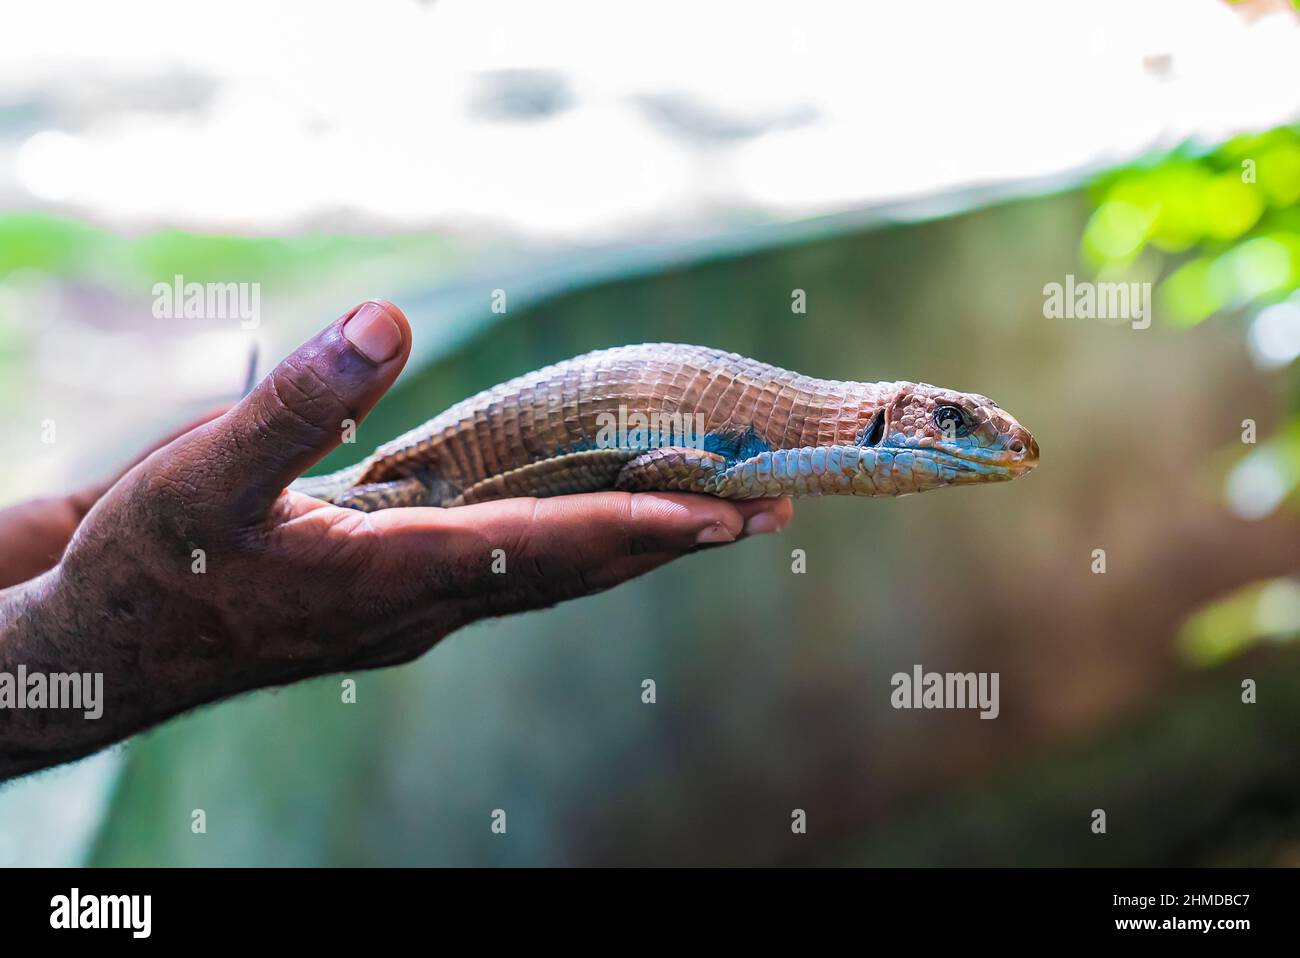 Lizard in the hands of man. Zanzibar, Tanzania Stock Photo